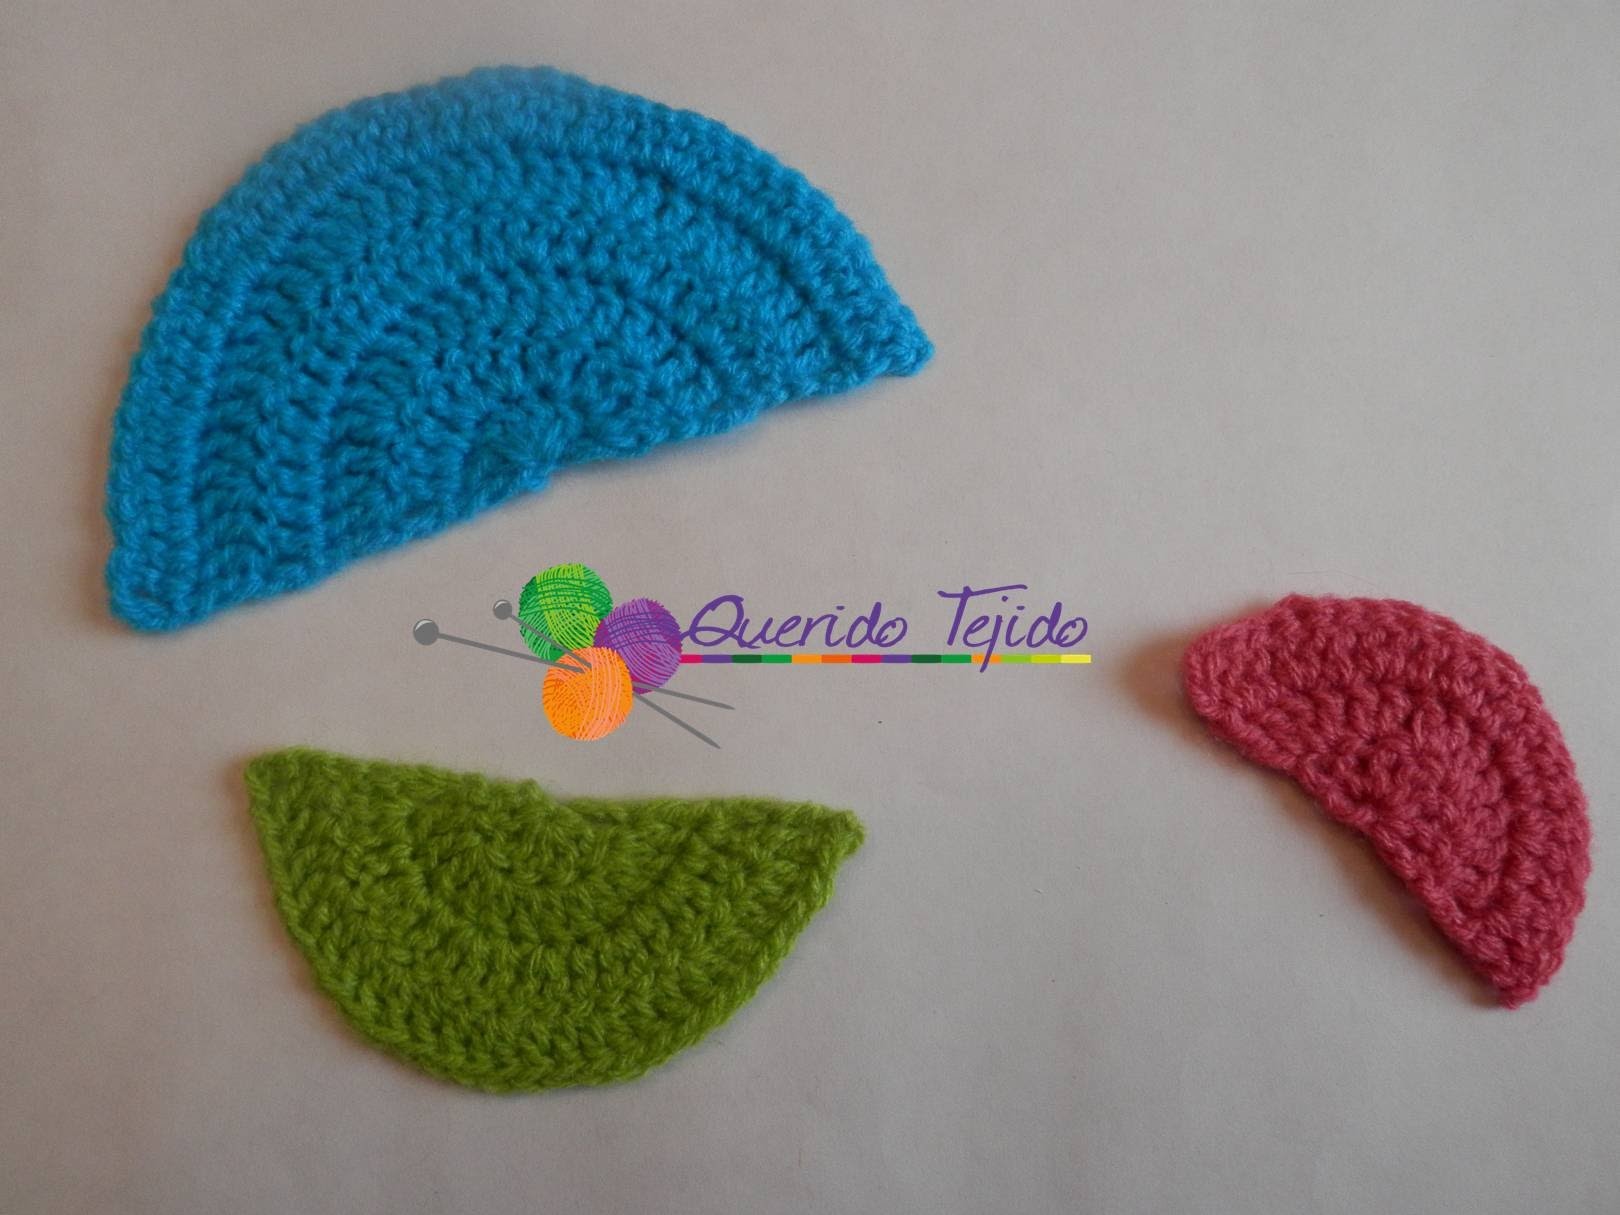 Medio círculo a crochet - How to crochet a half circle ENGLISH SUB